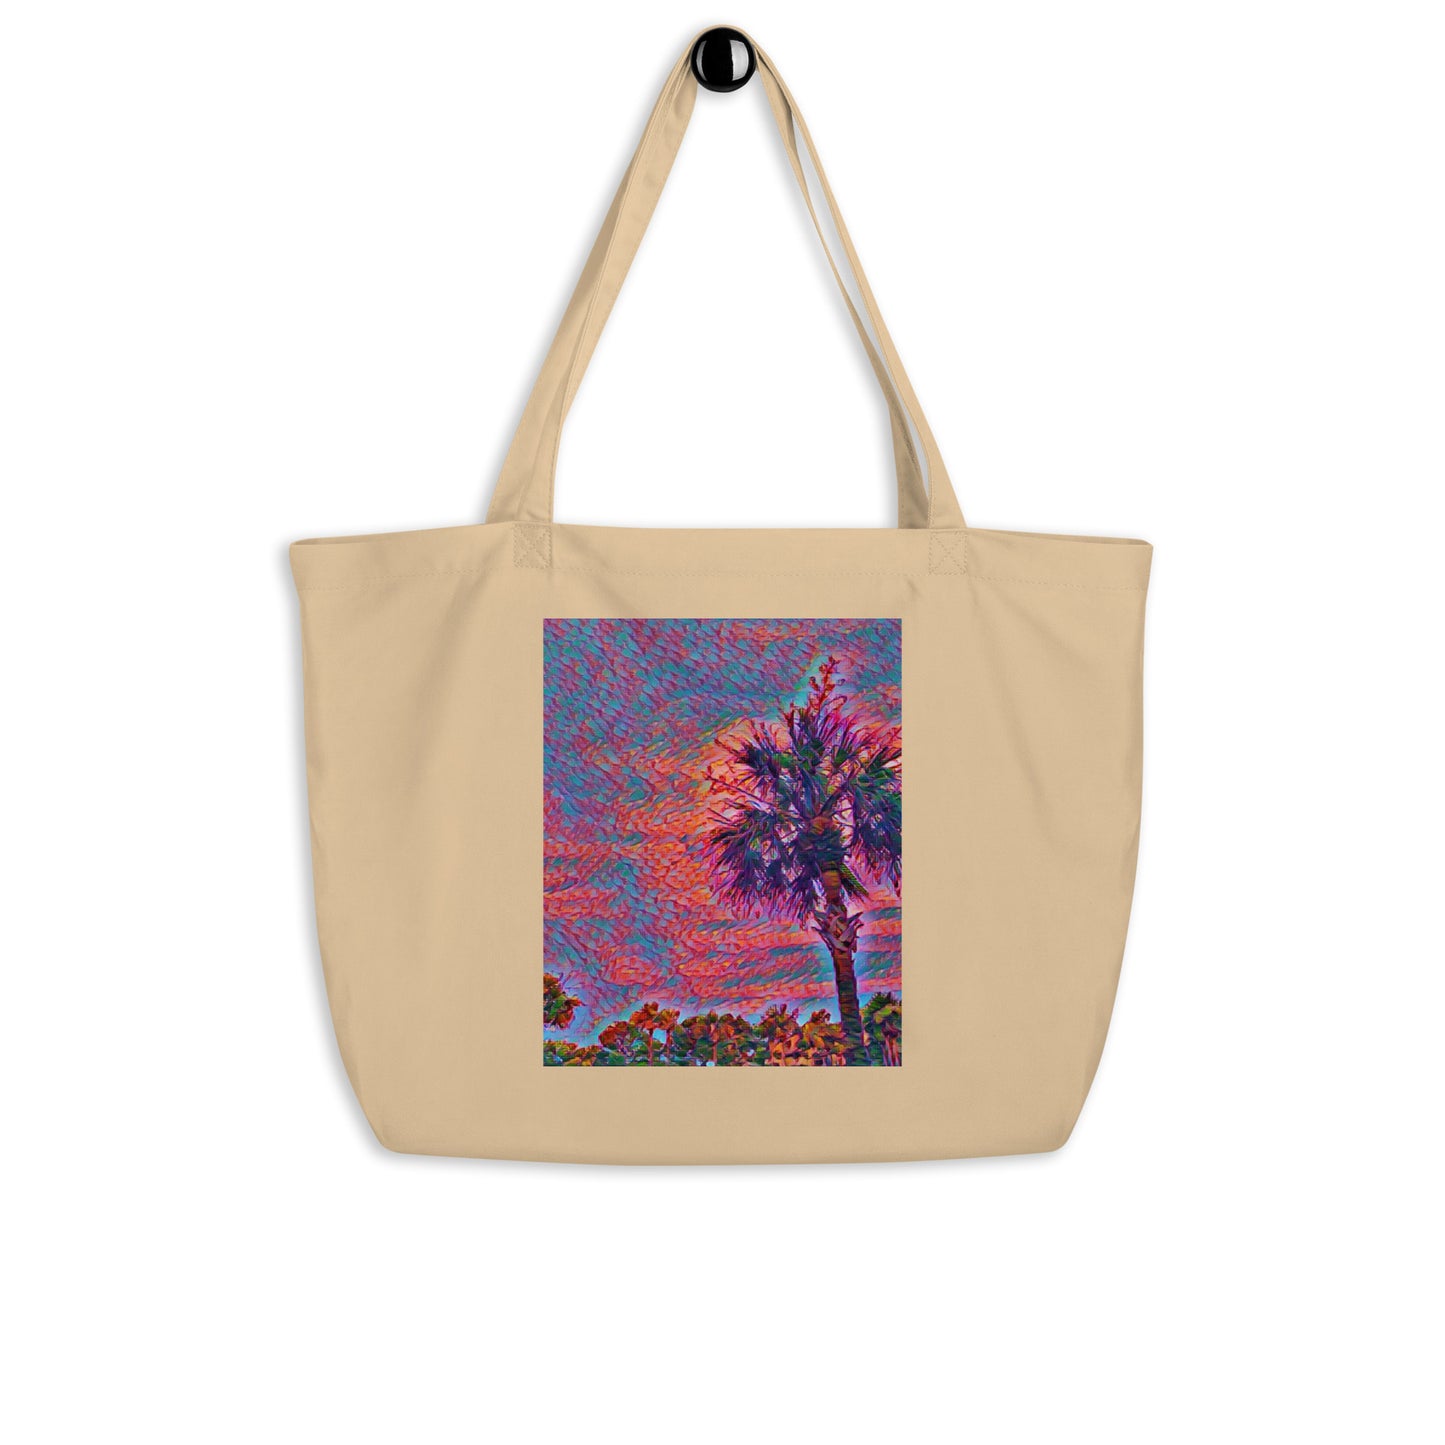 Palmetto Evening Large organic tote bag - A. Mandaline Art